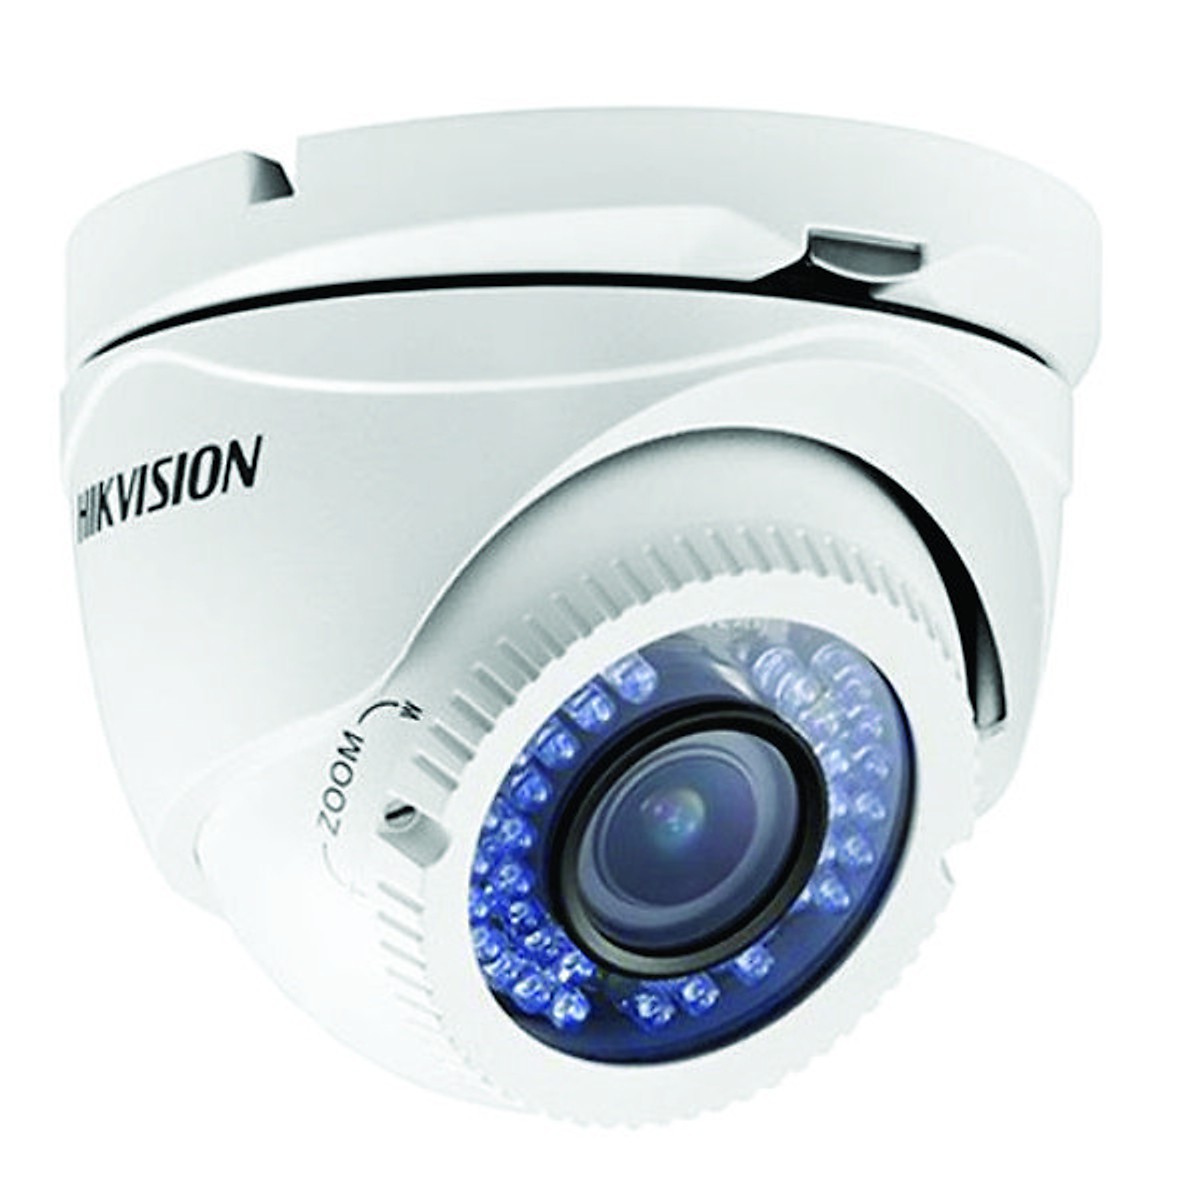 Camera Hikvision DS-2CE56D0T-VFIR3E